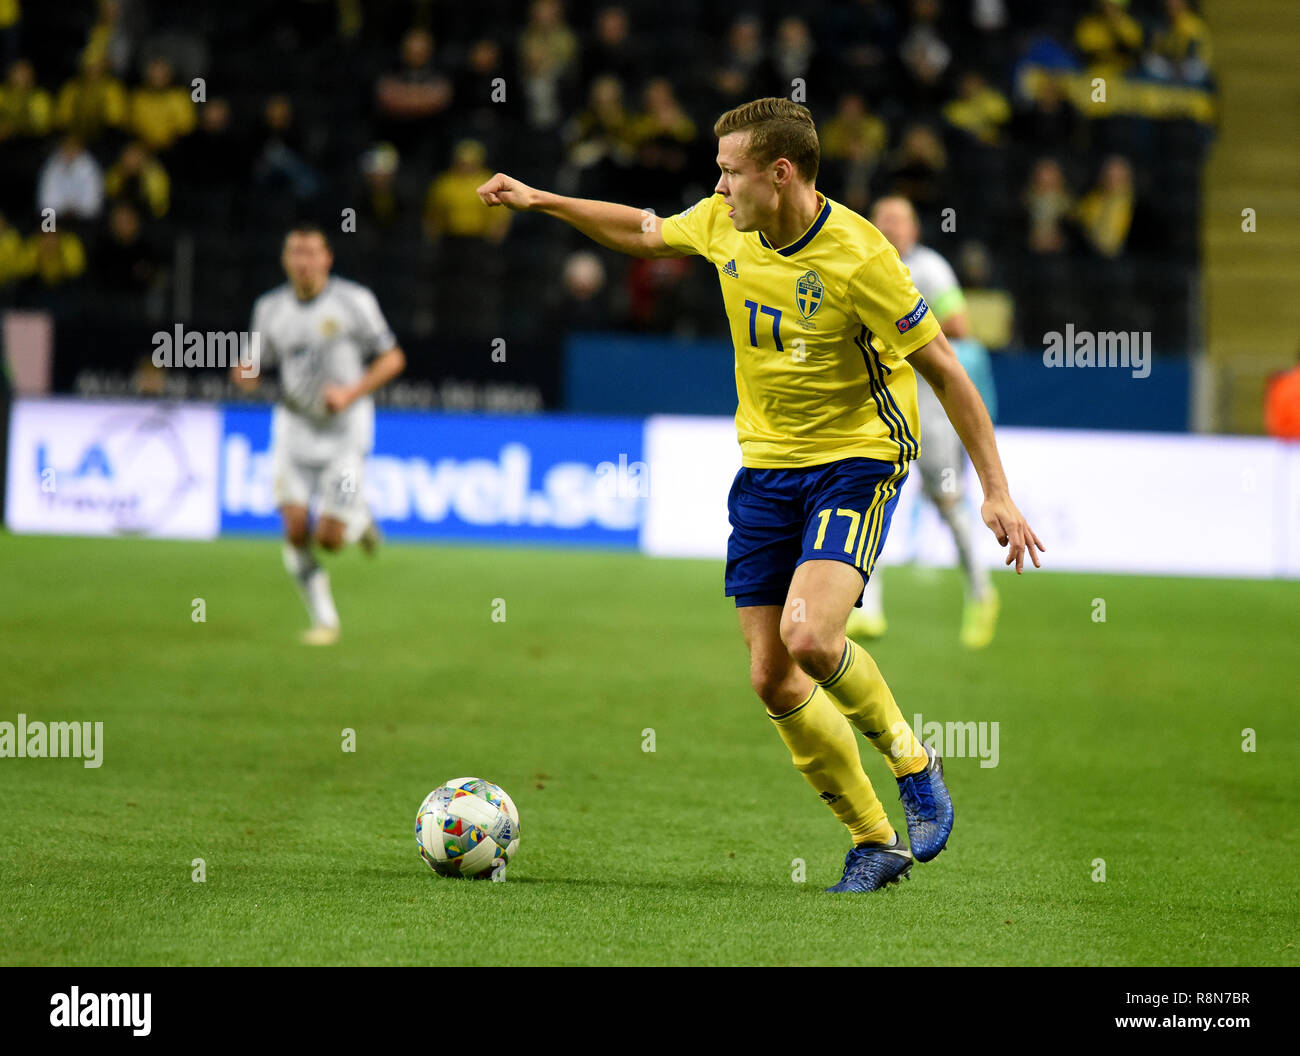 Solna, Sweden - November 20, 2018. Sweden national team midfielder Viktor Claesson during UEFA Nations League match Sweden vs Russia in Solna. Stock Photo